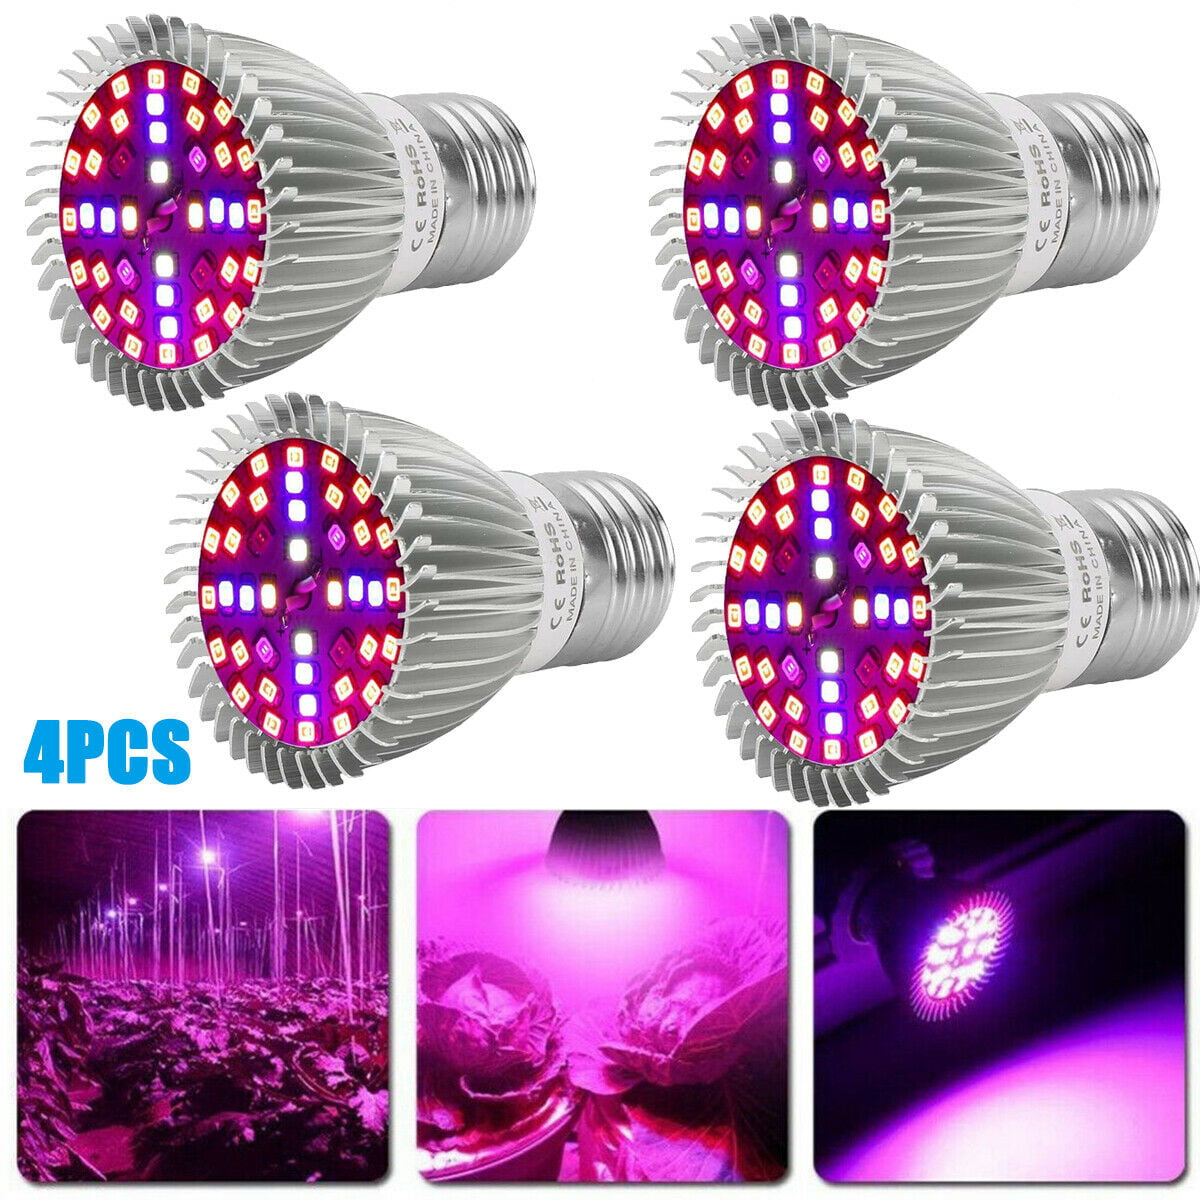 1/2/4Pcs 28W LED Grow Full Spectrum Hydroponic Bulb Light Plant Grow Flower Lamp 